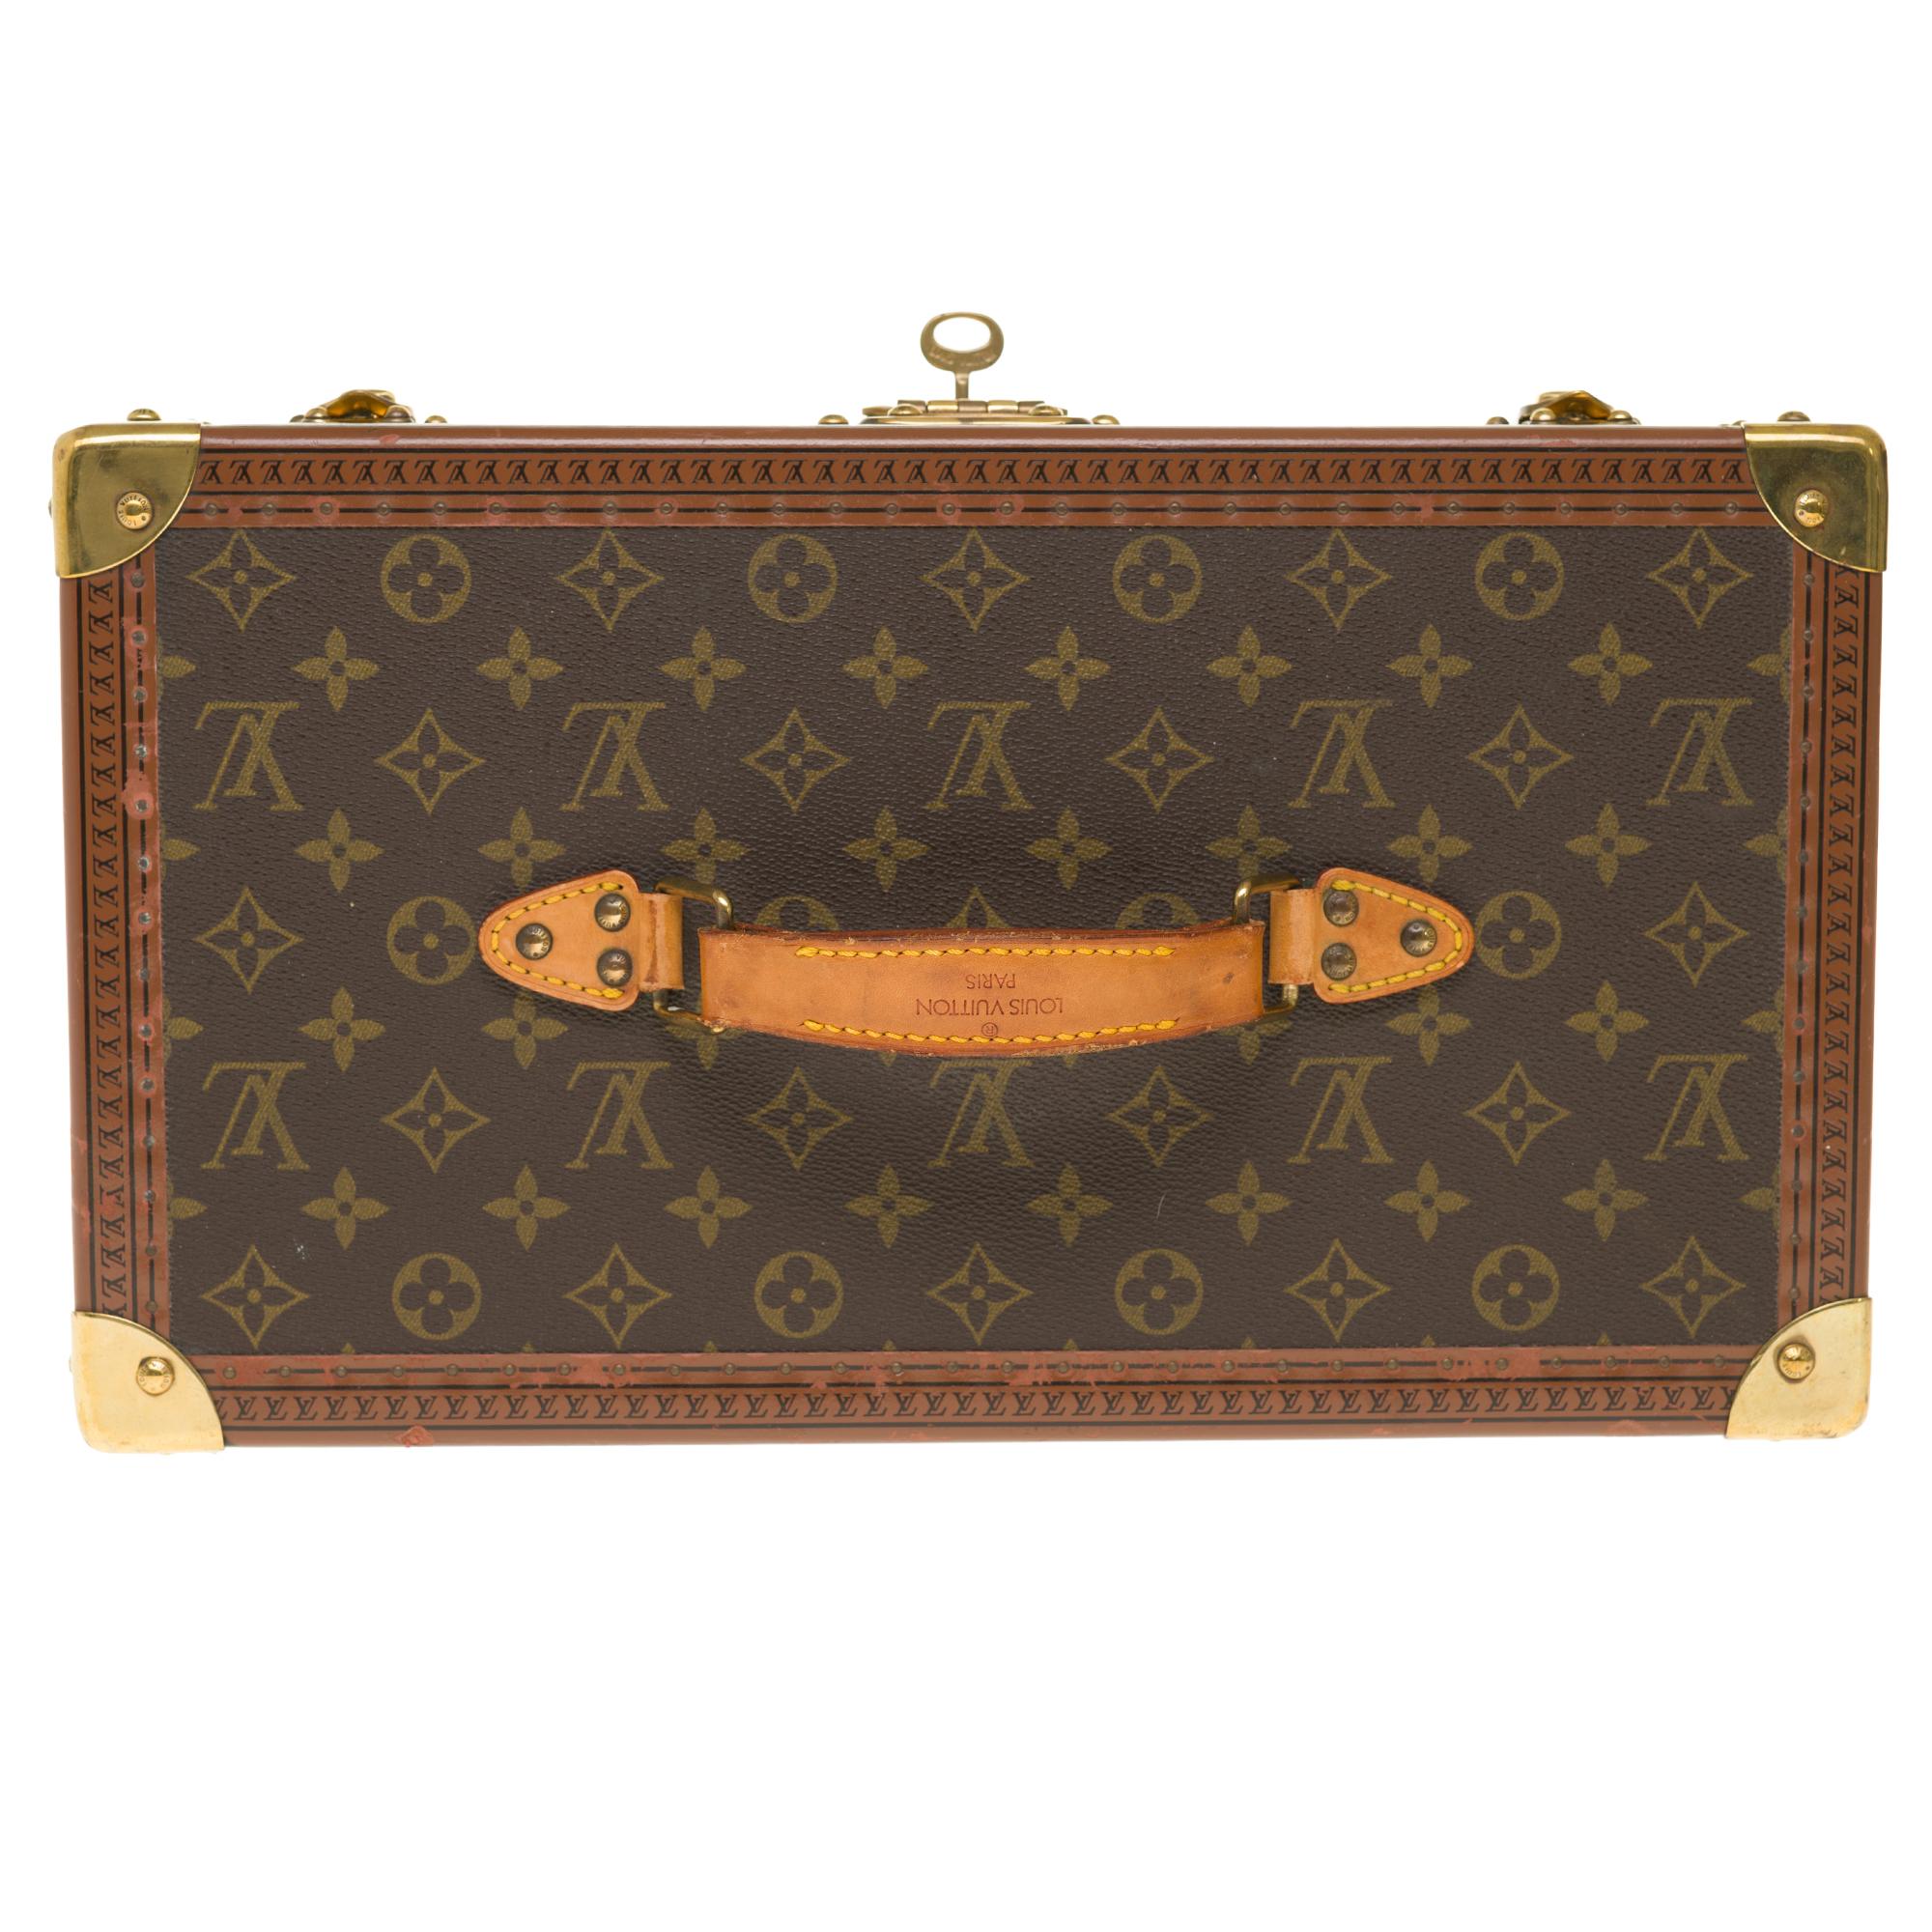 Amazing Louis Vuitton Vanity Case in monogram Canvas and brass hardware 1